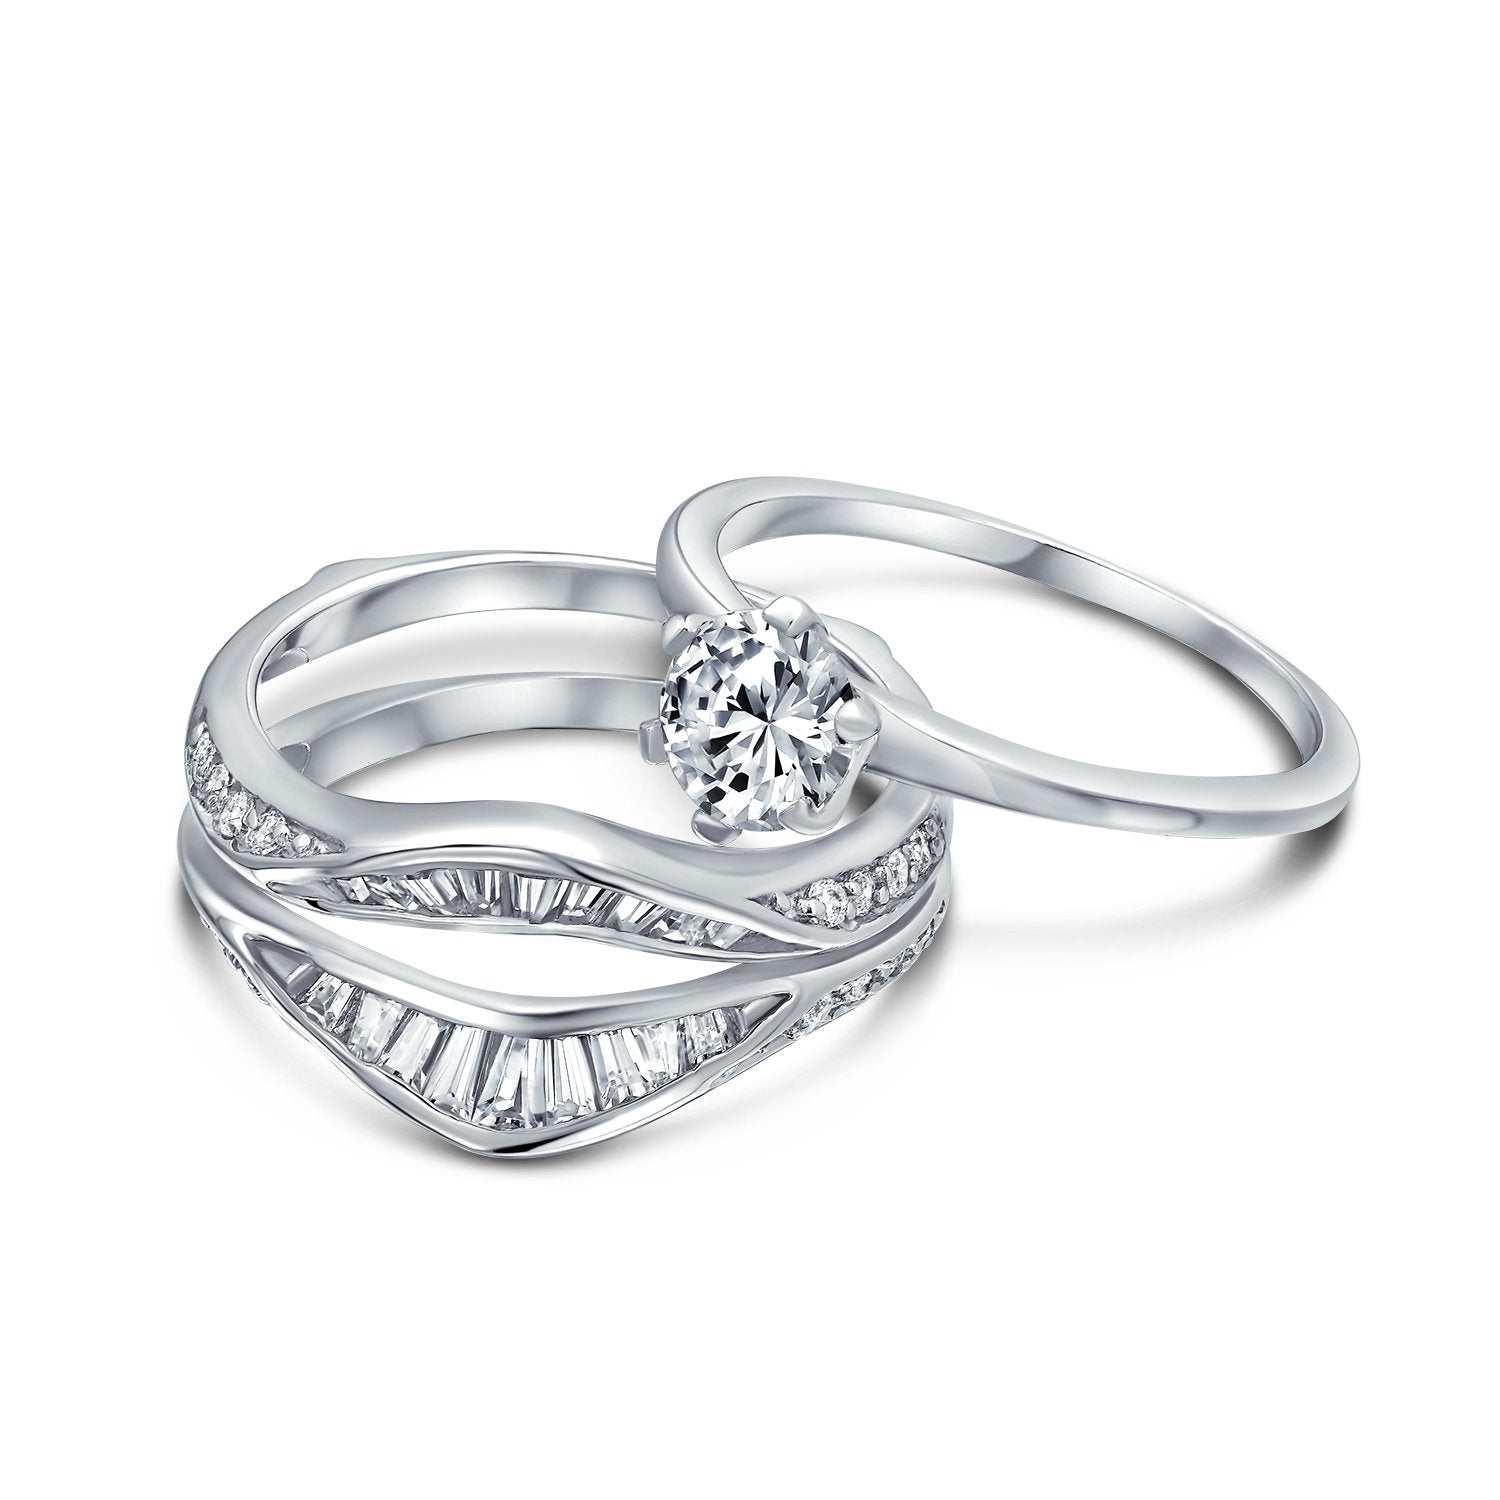 1.5CT Baguette Solitaire CZ Engagement Ring Set 925 Sterling Silver - Joyeria Lady